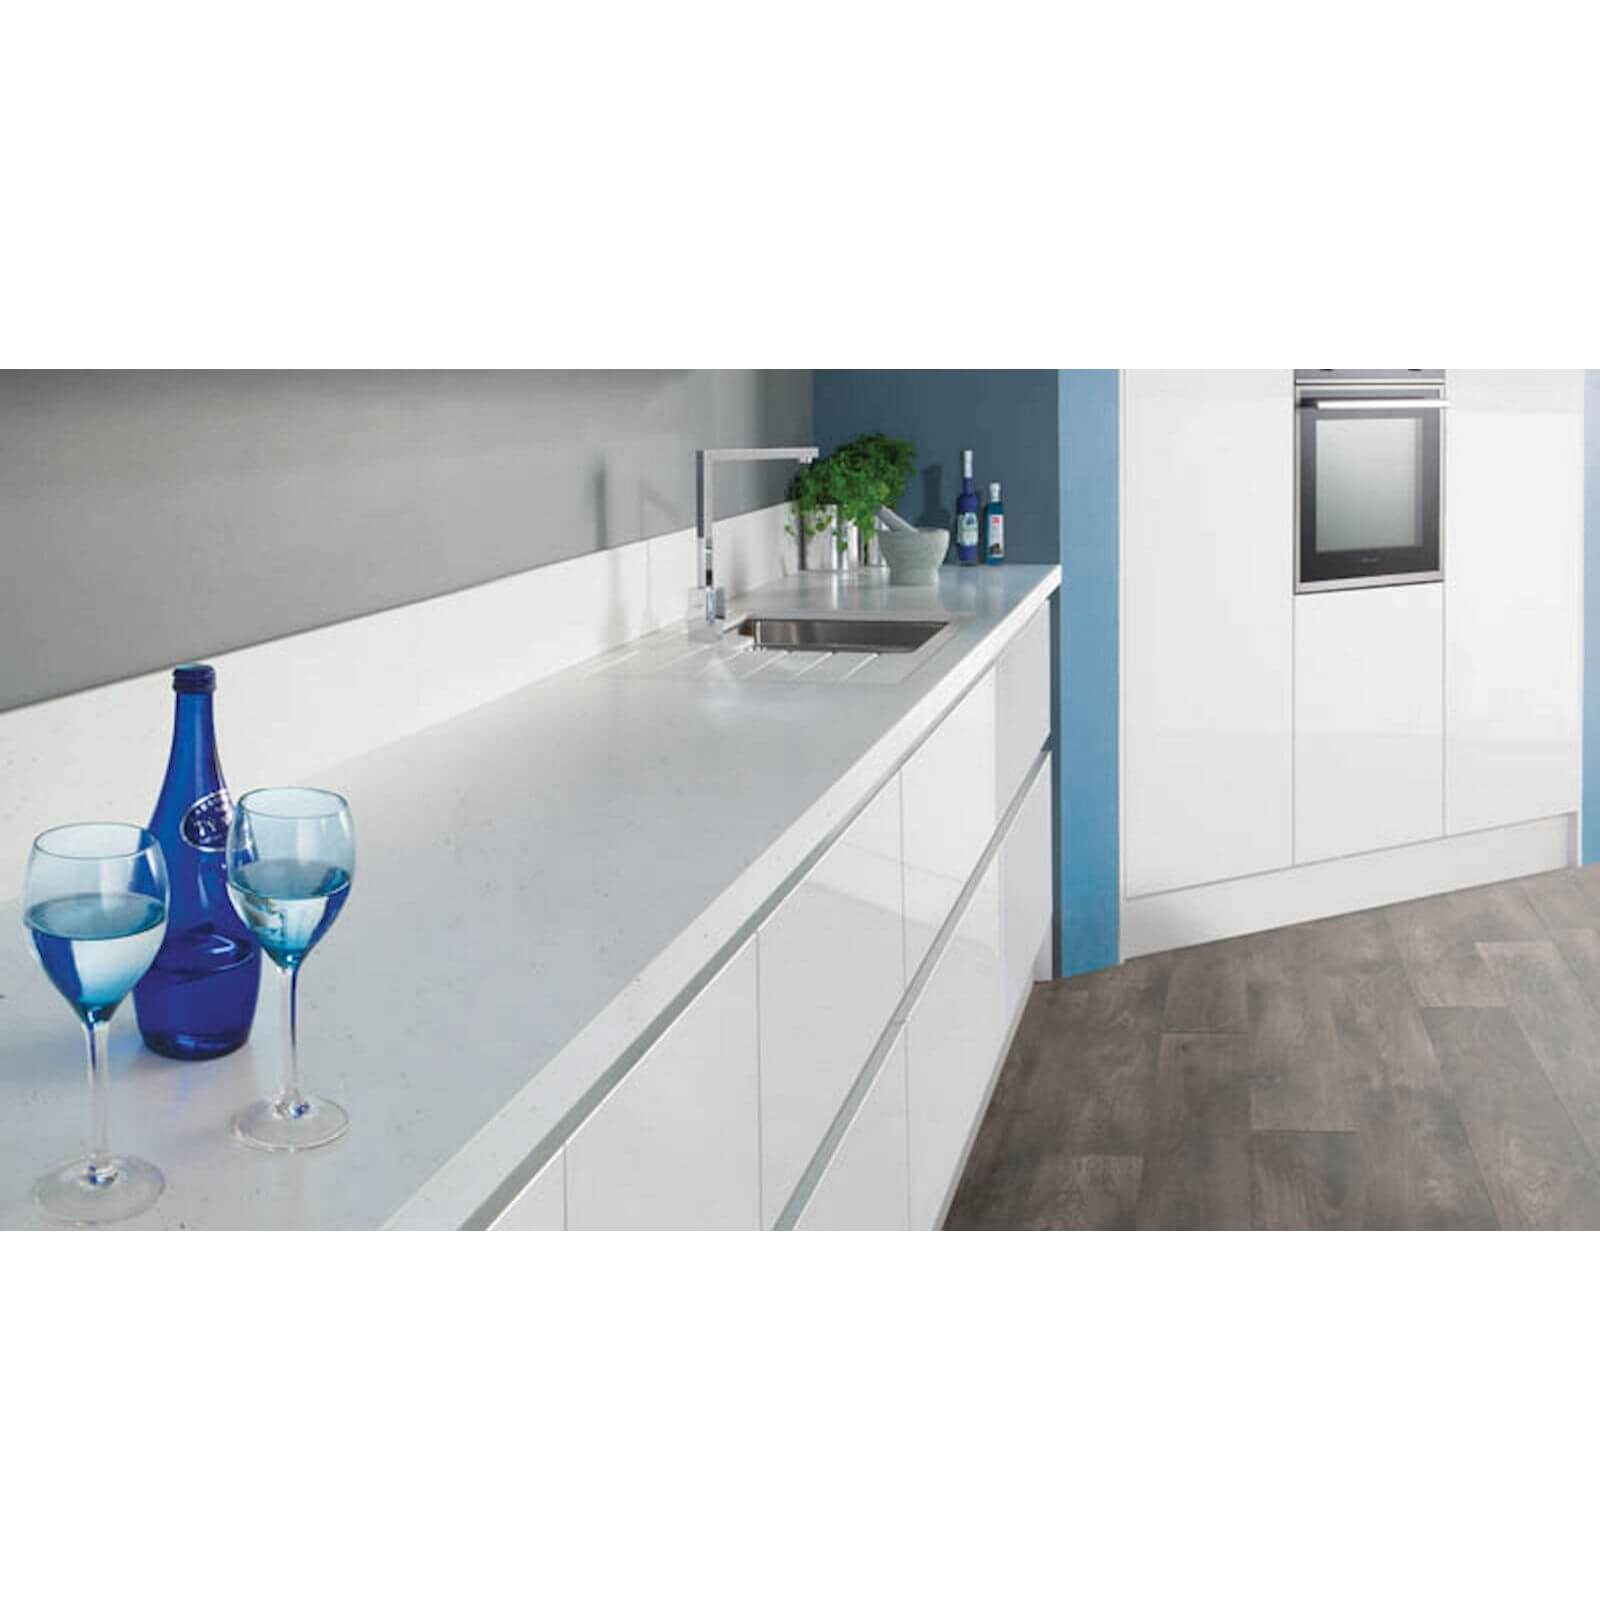 Maia Calcite Kitchen Sink Worktop - Universal Super Large Bowl - 1800 x 600 x 28mm